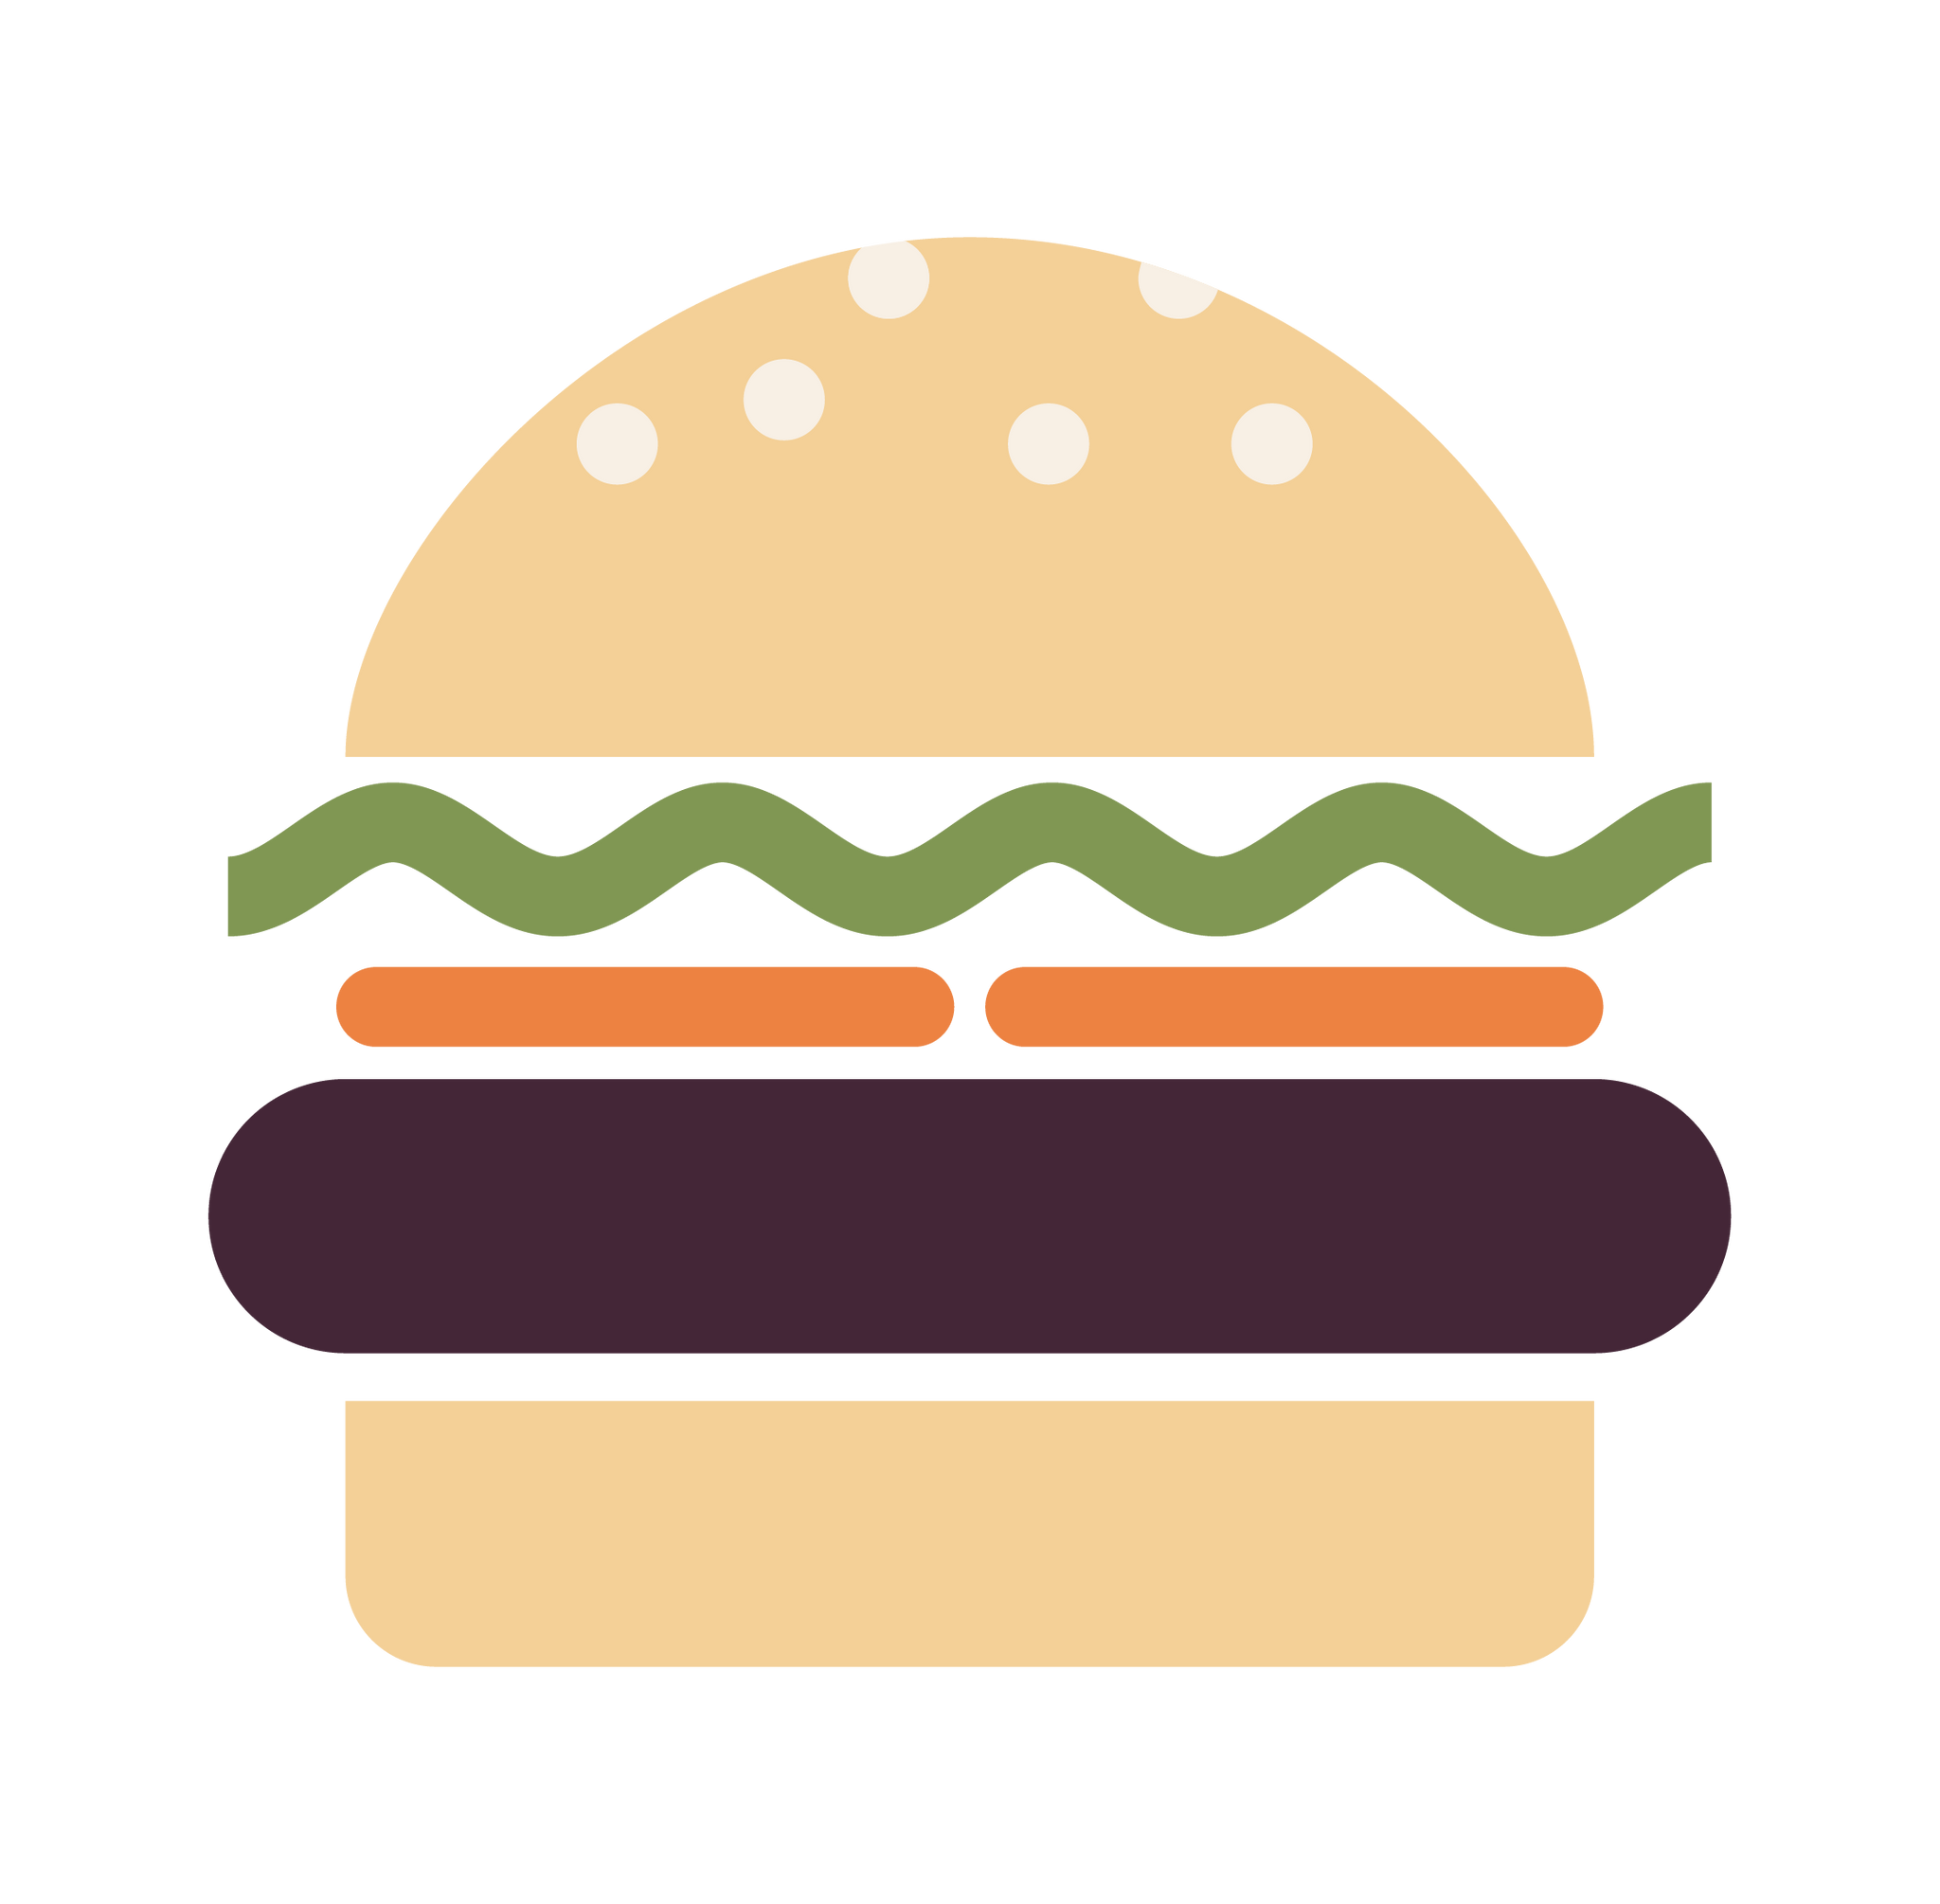 Mushroom Black Bean Burger (4-Pack)